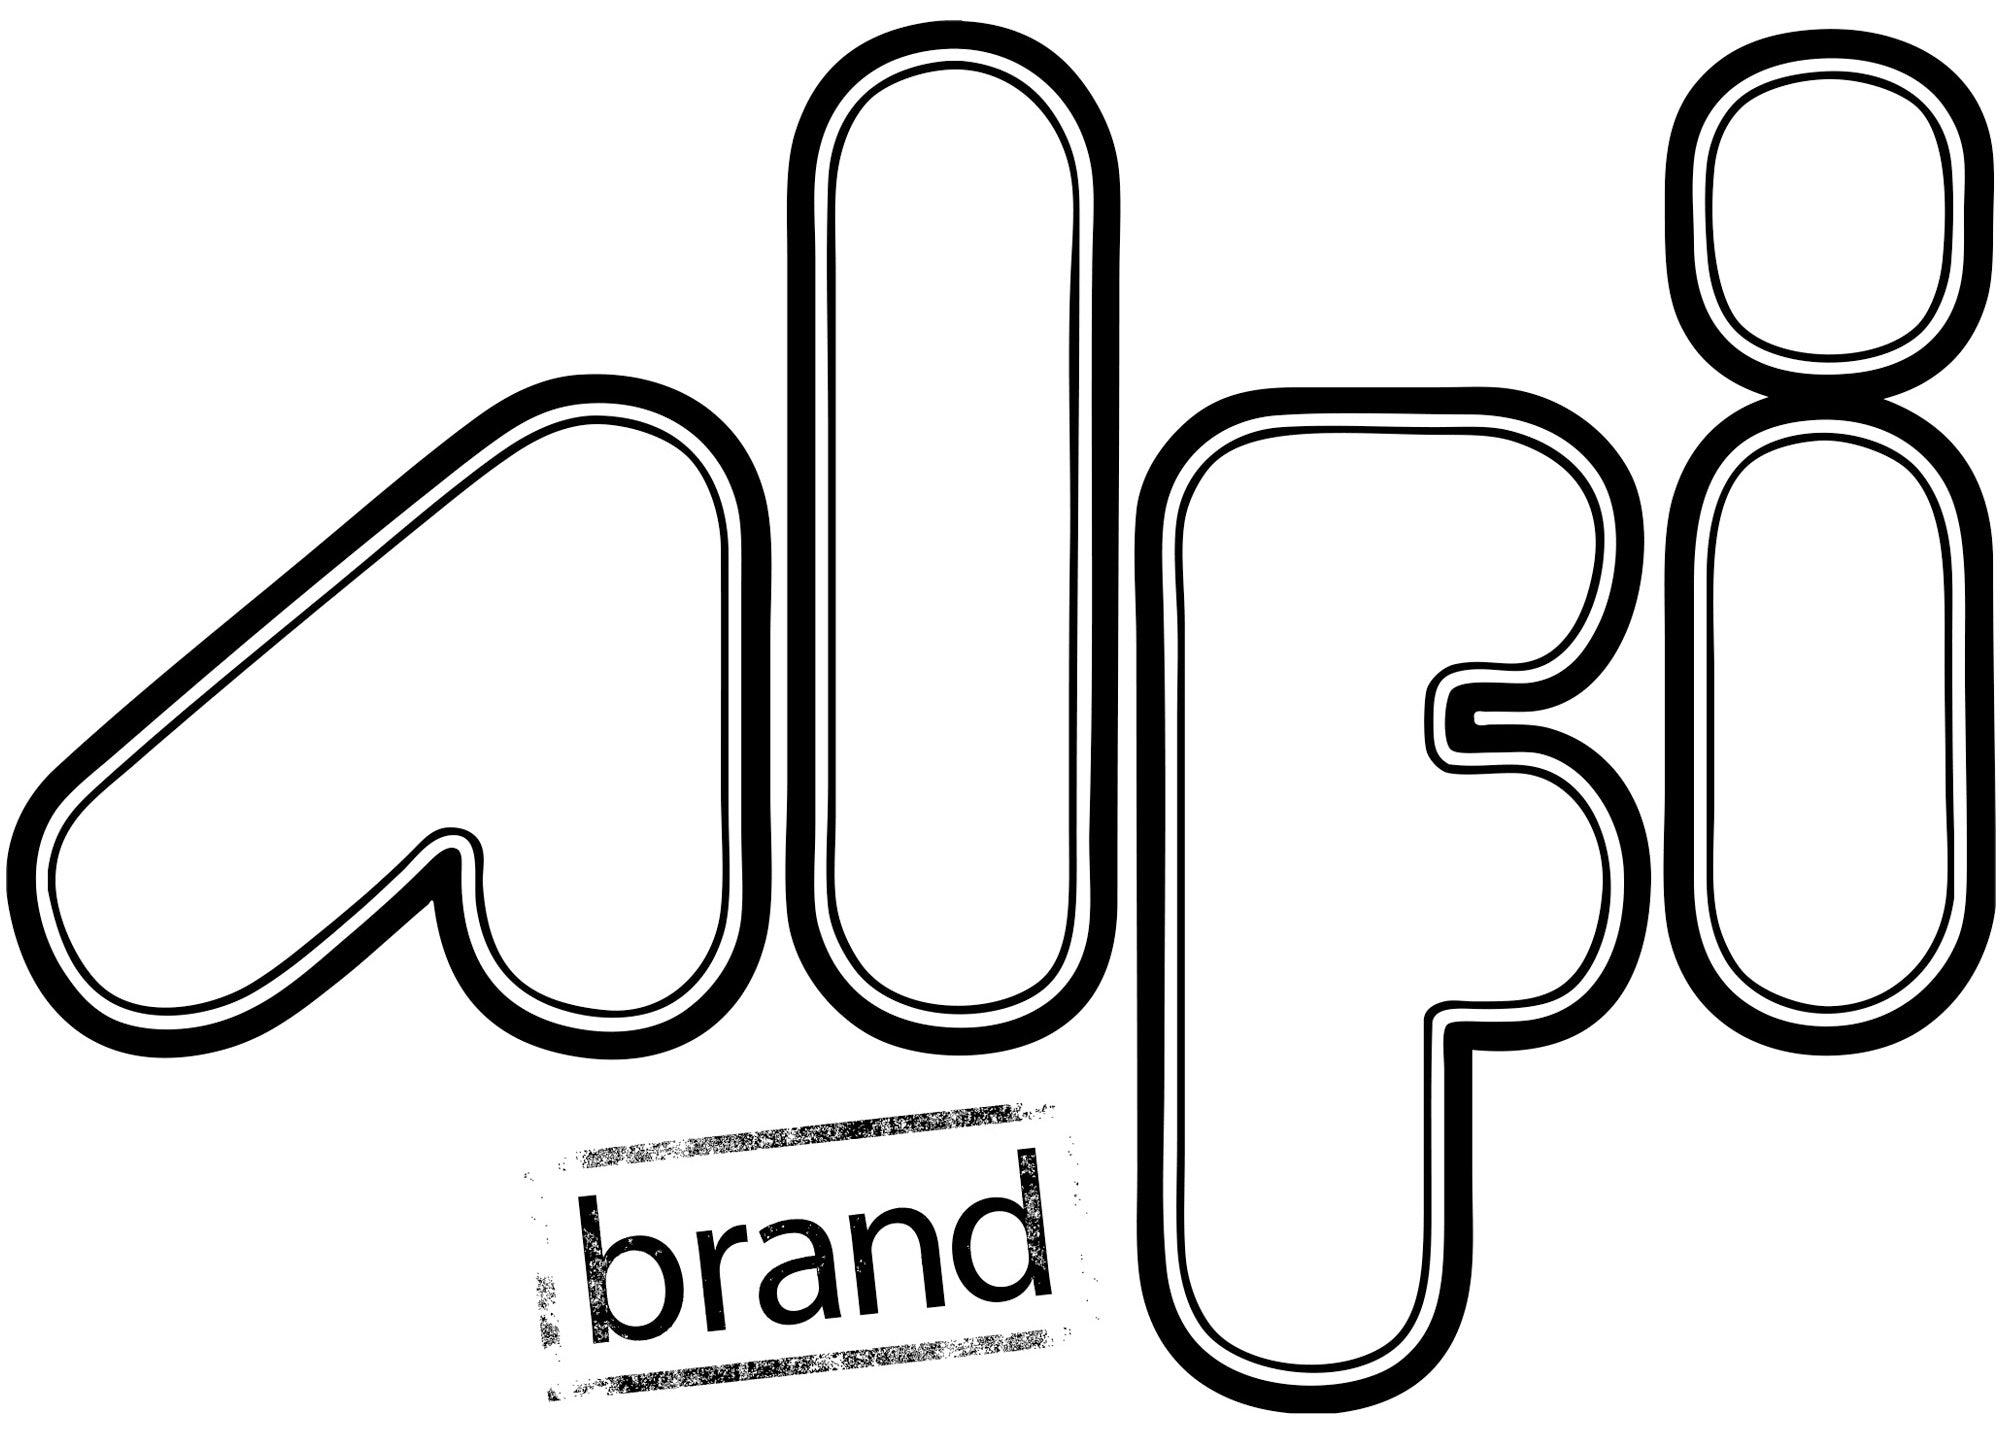 ALFI Brand - Brushed Nickel 12" Round Multi Color LED Rain Shower Head | LED12R-BN